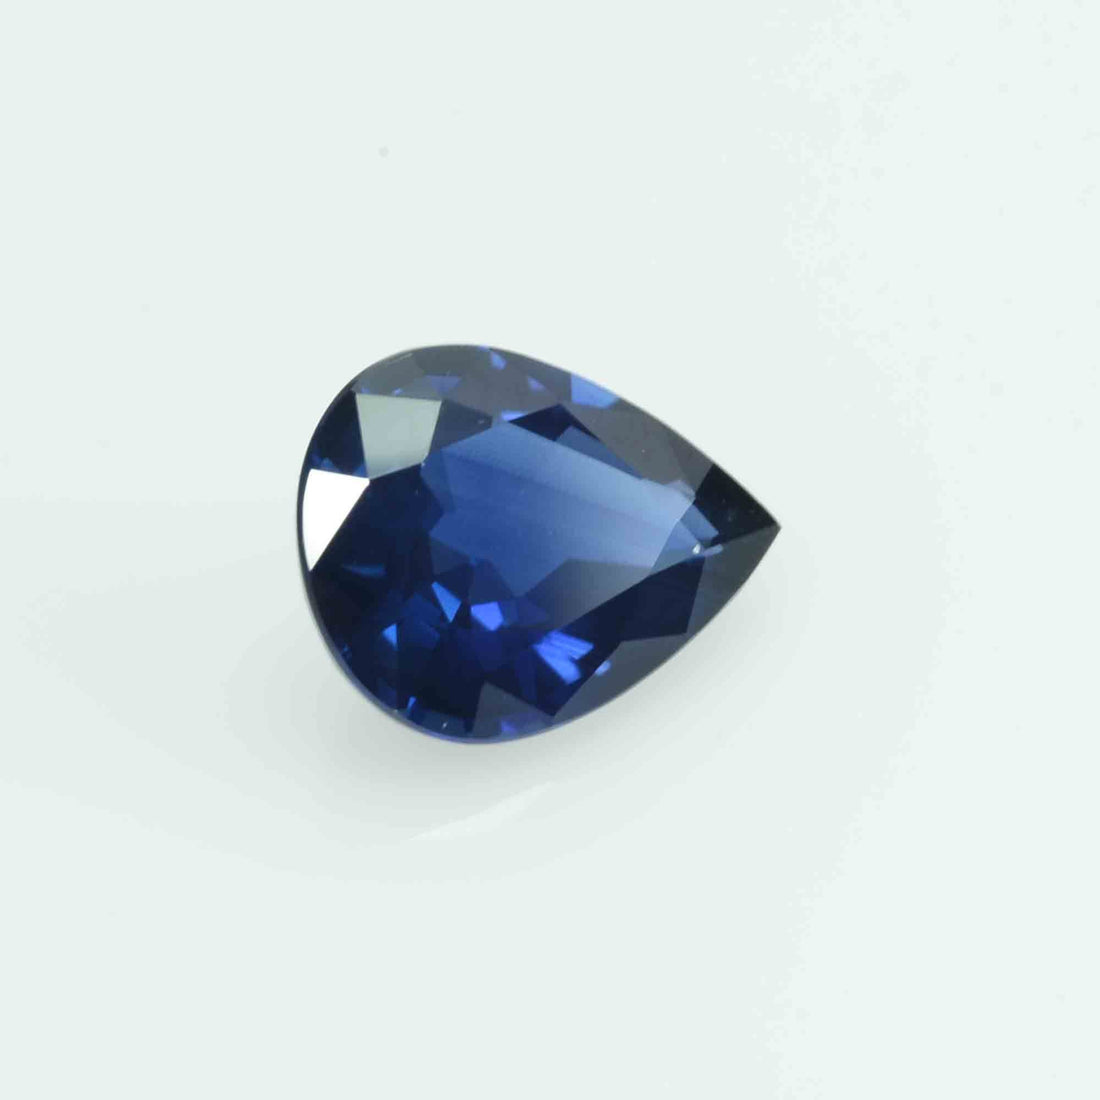 1.18 cts Natural Blue Sapphire Loose Gemstone Pear Cut